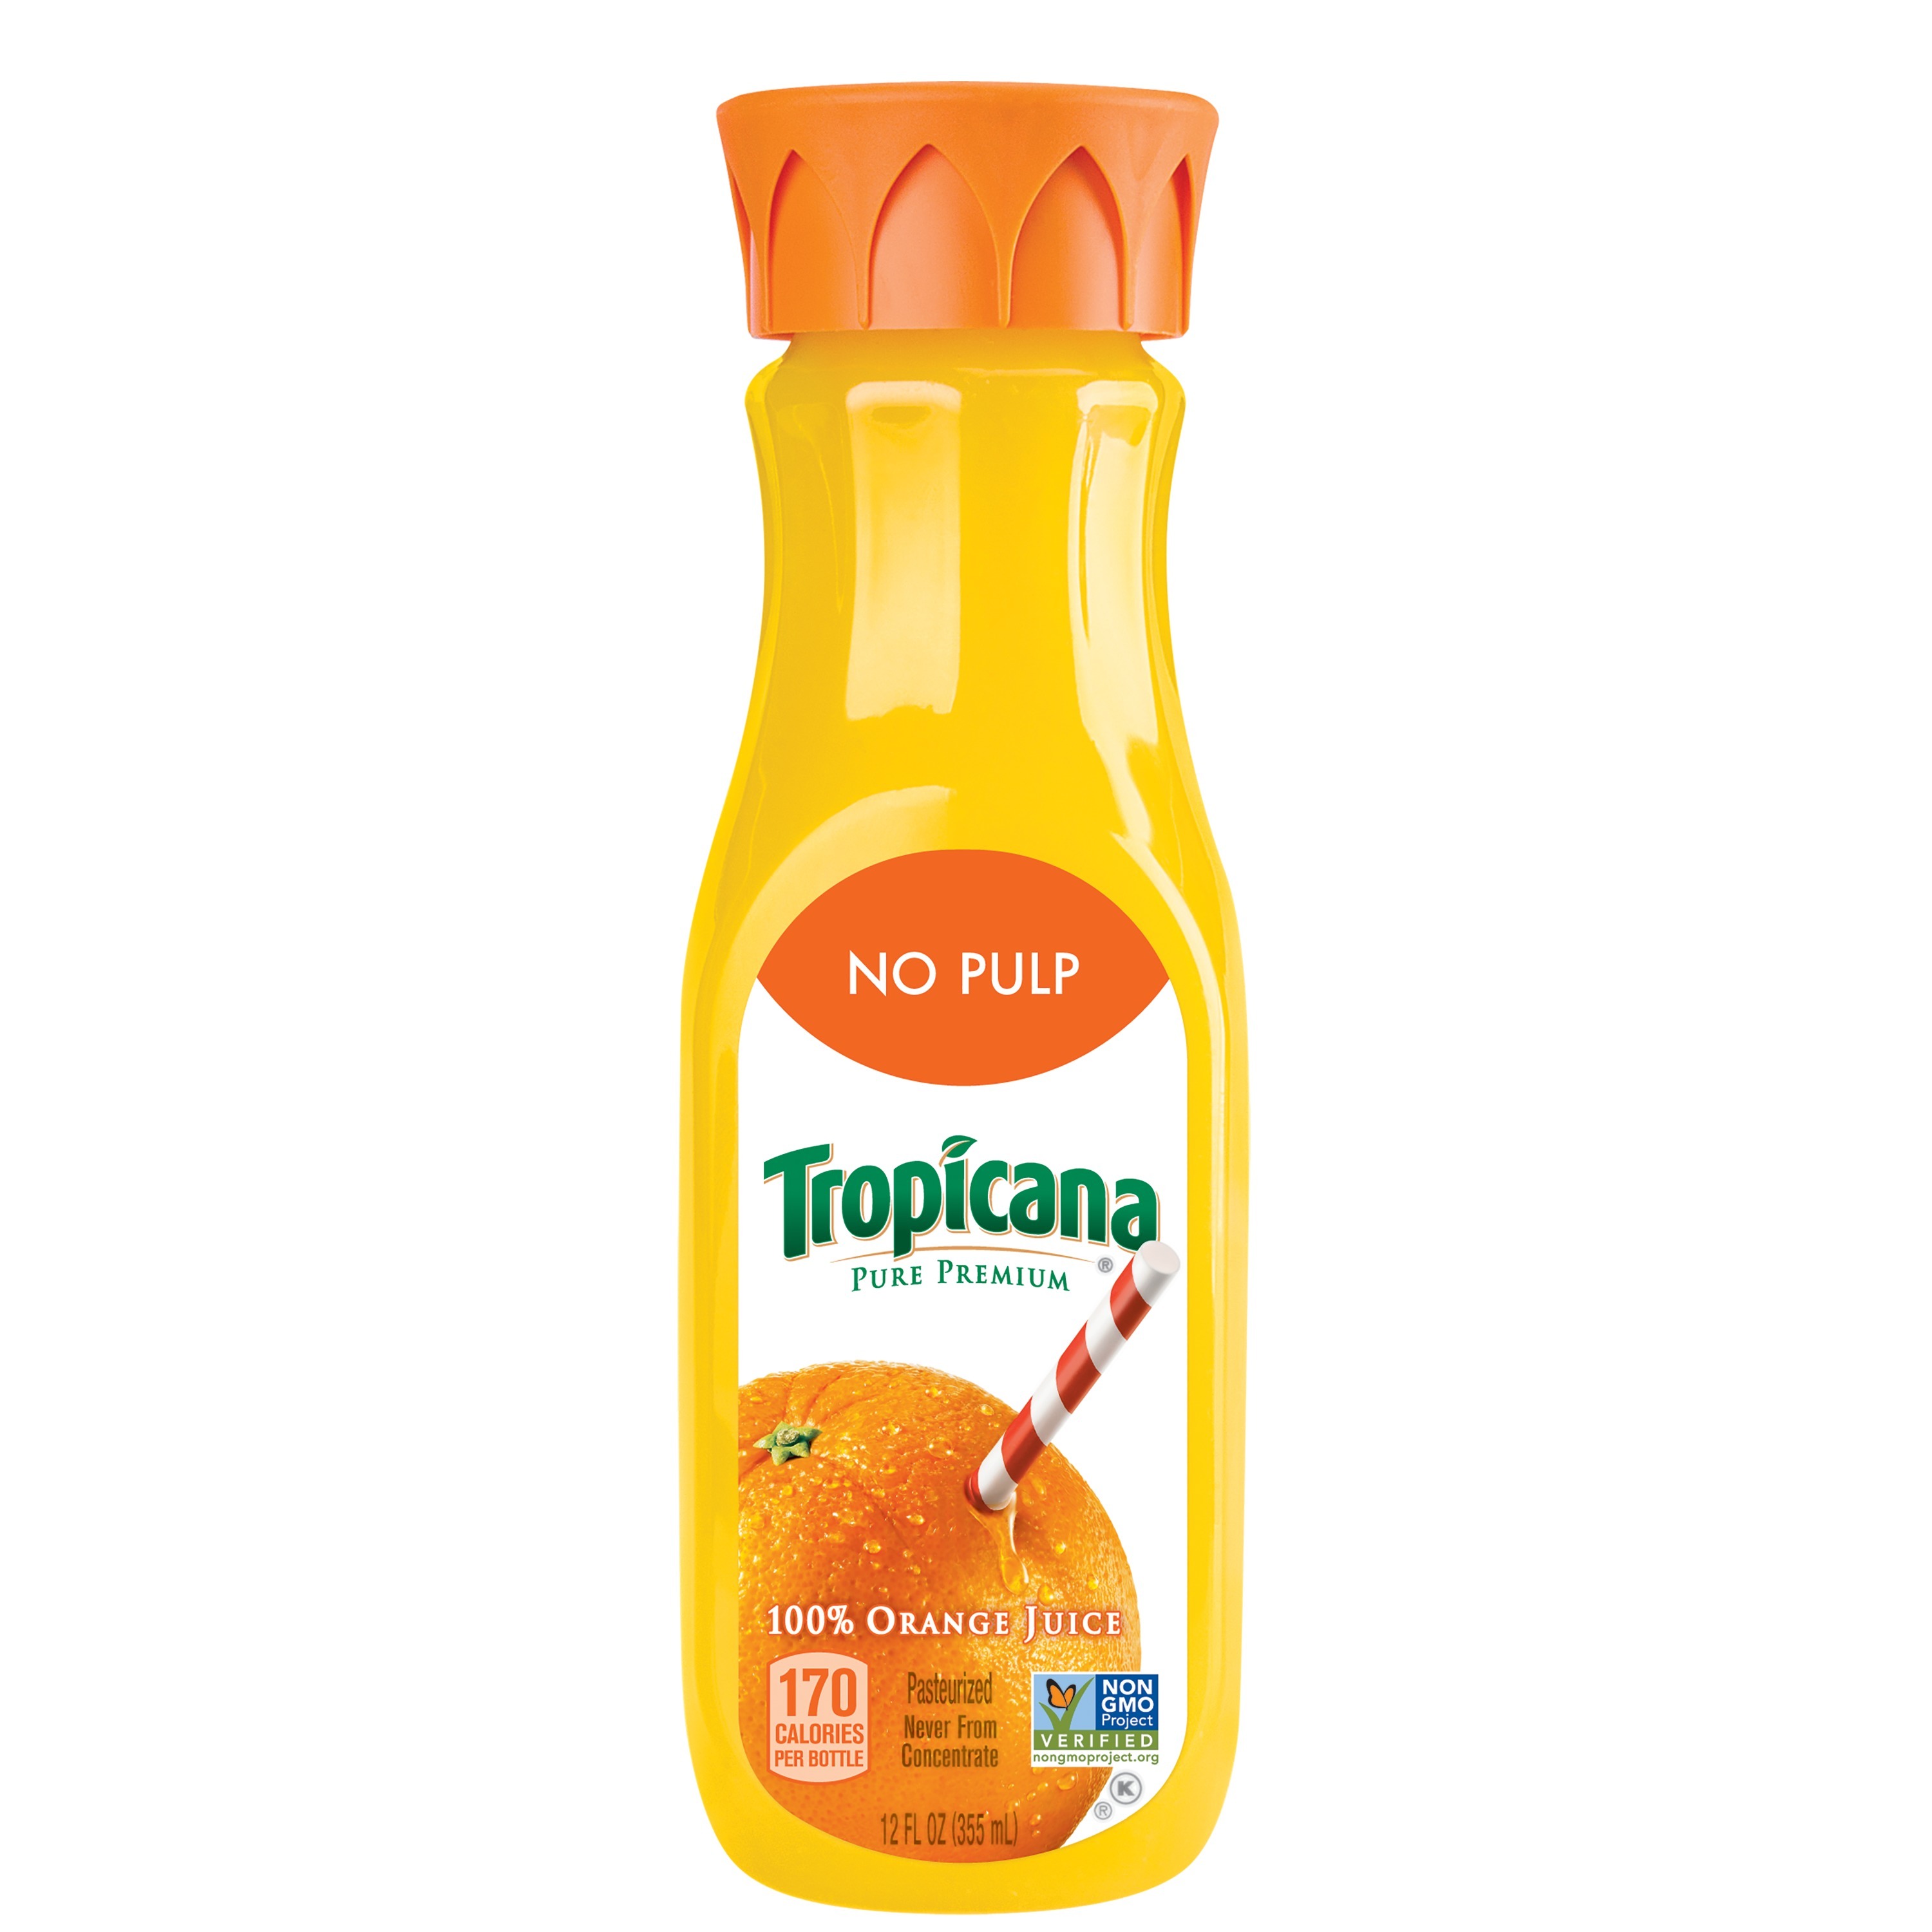 Tropicana Pure Premium No Pulp 100% Orange Juice, 12 oz, Bottle, Fruit Juice - image 1 of 6